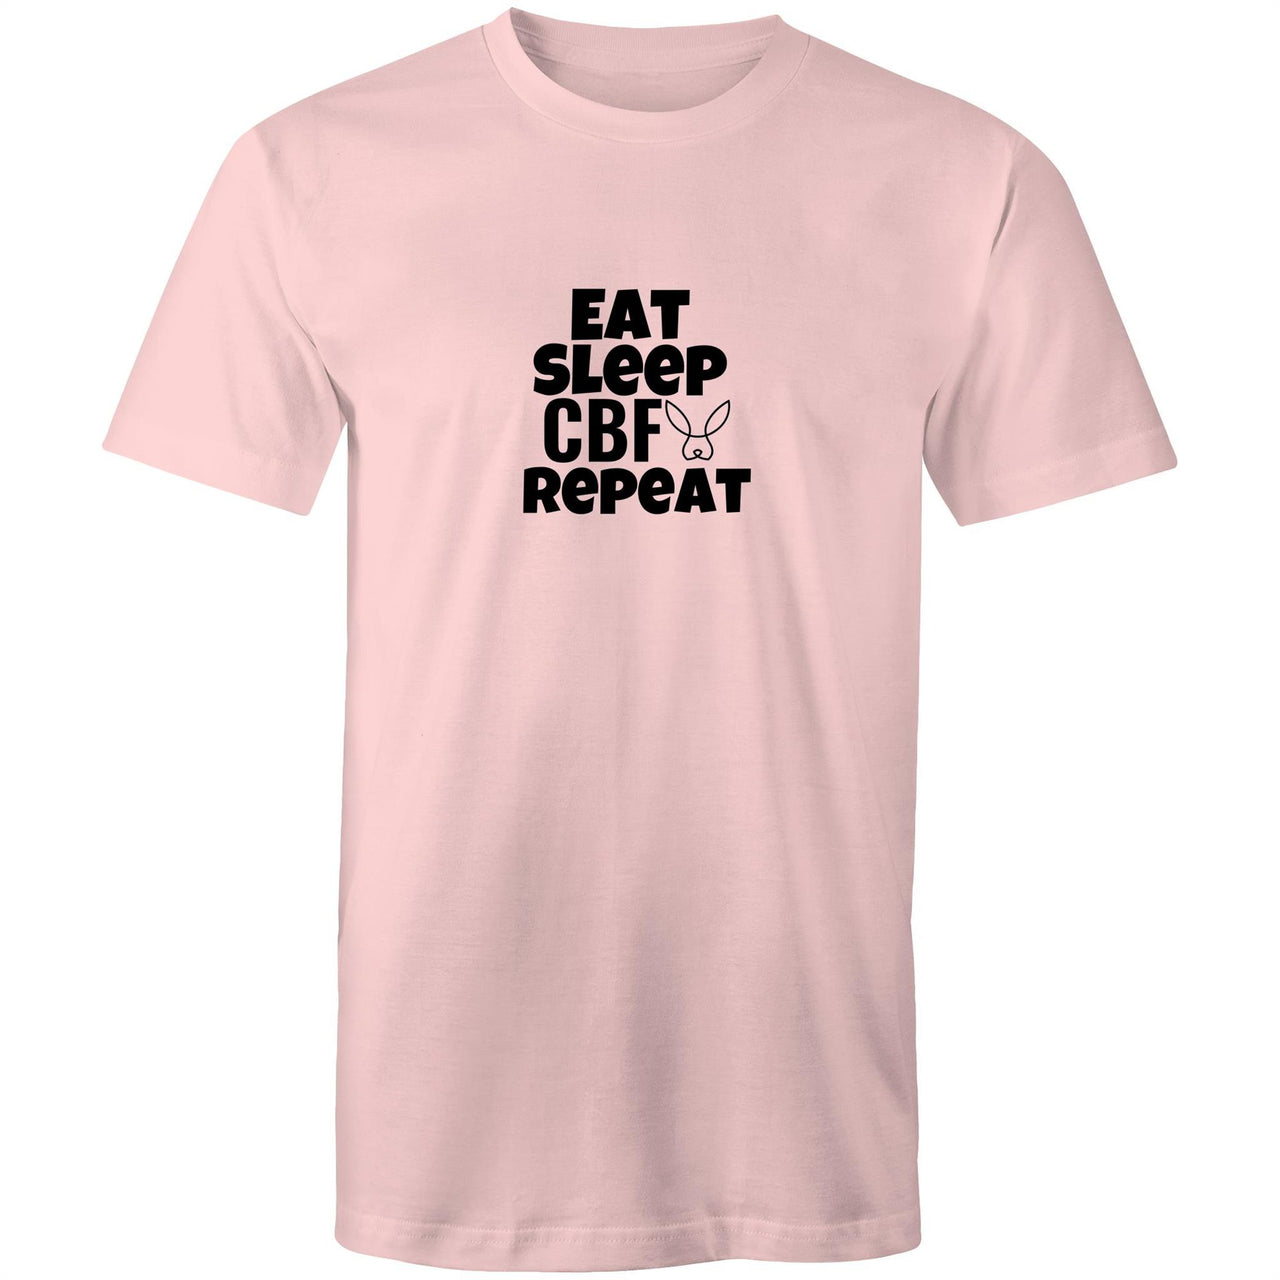 Eat Sleep CBF Repeat Crew Pink T-Shirt by CBF Clothing